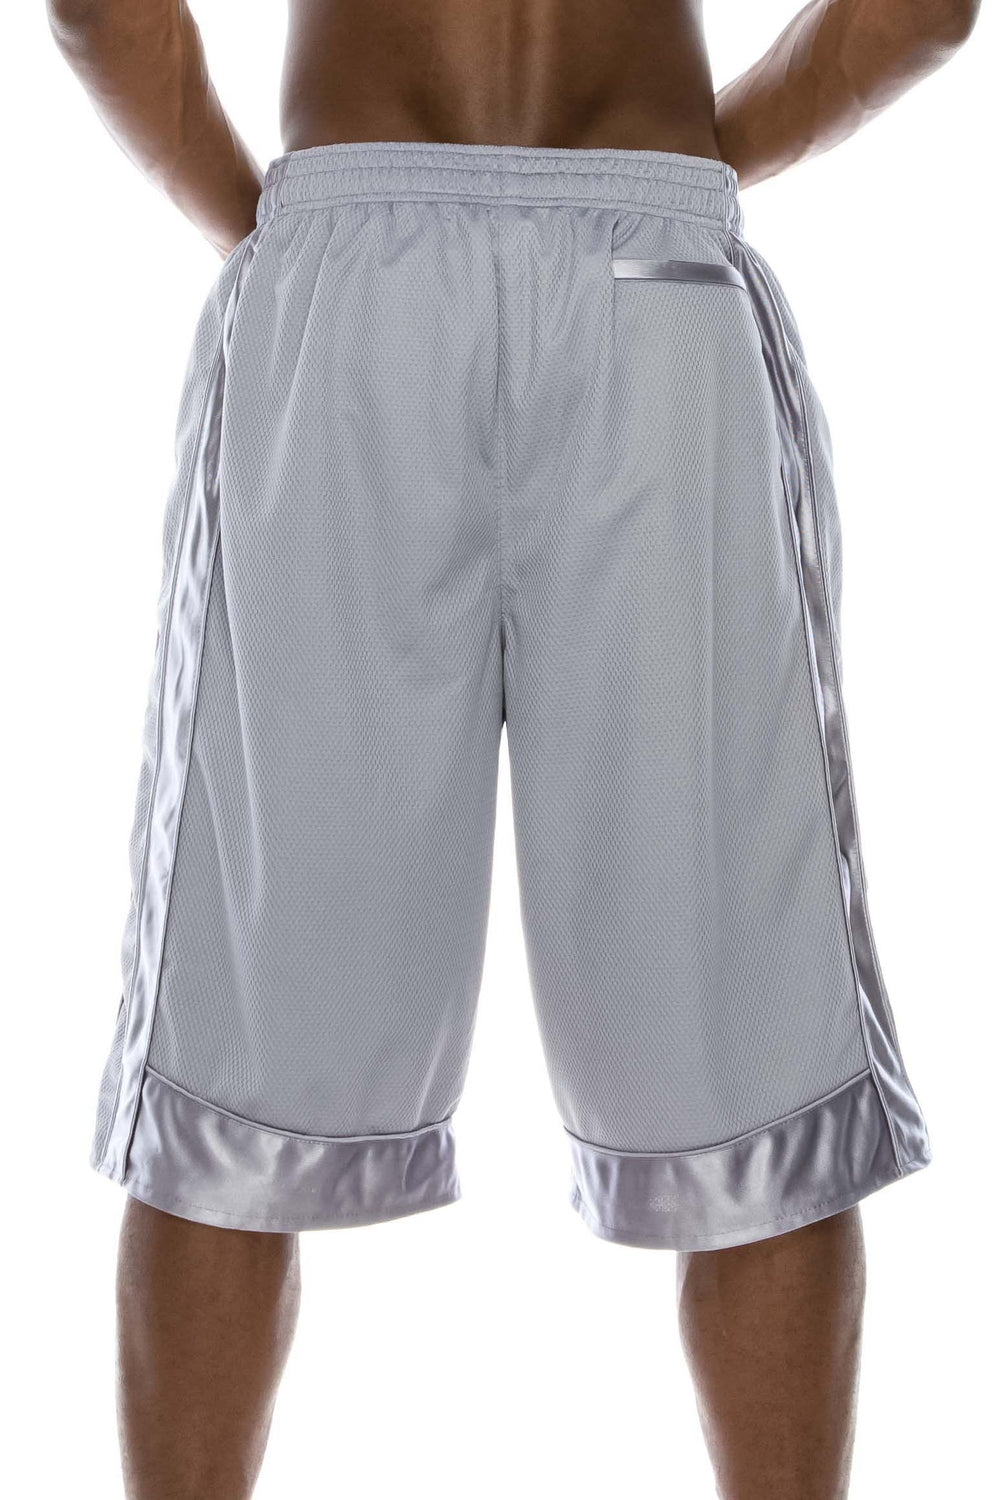 pro club Pro Club Men's Heavyweight Mesh Basketball Shorts - Black/Gray -  Medium